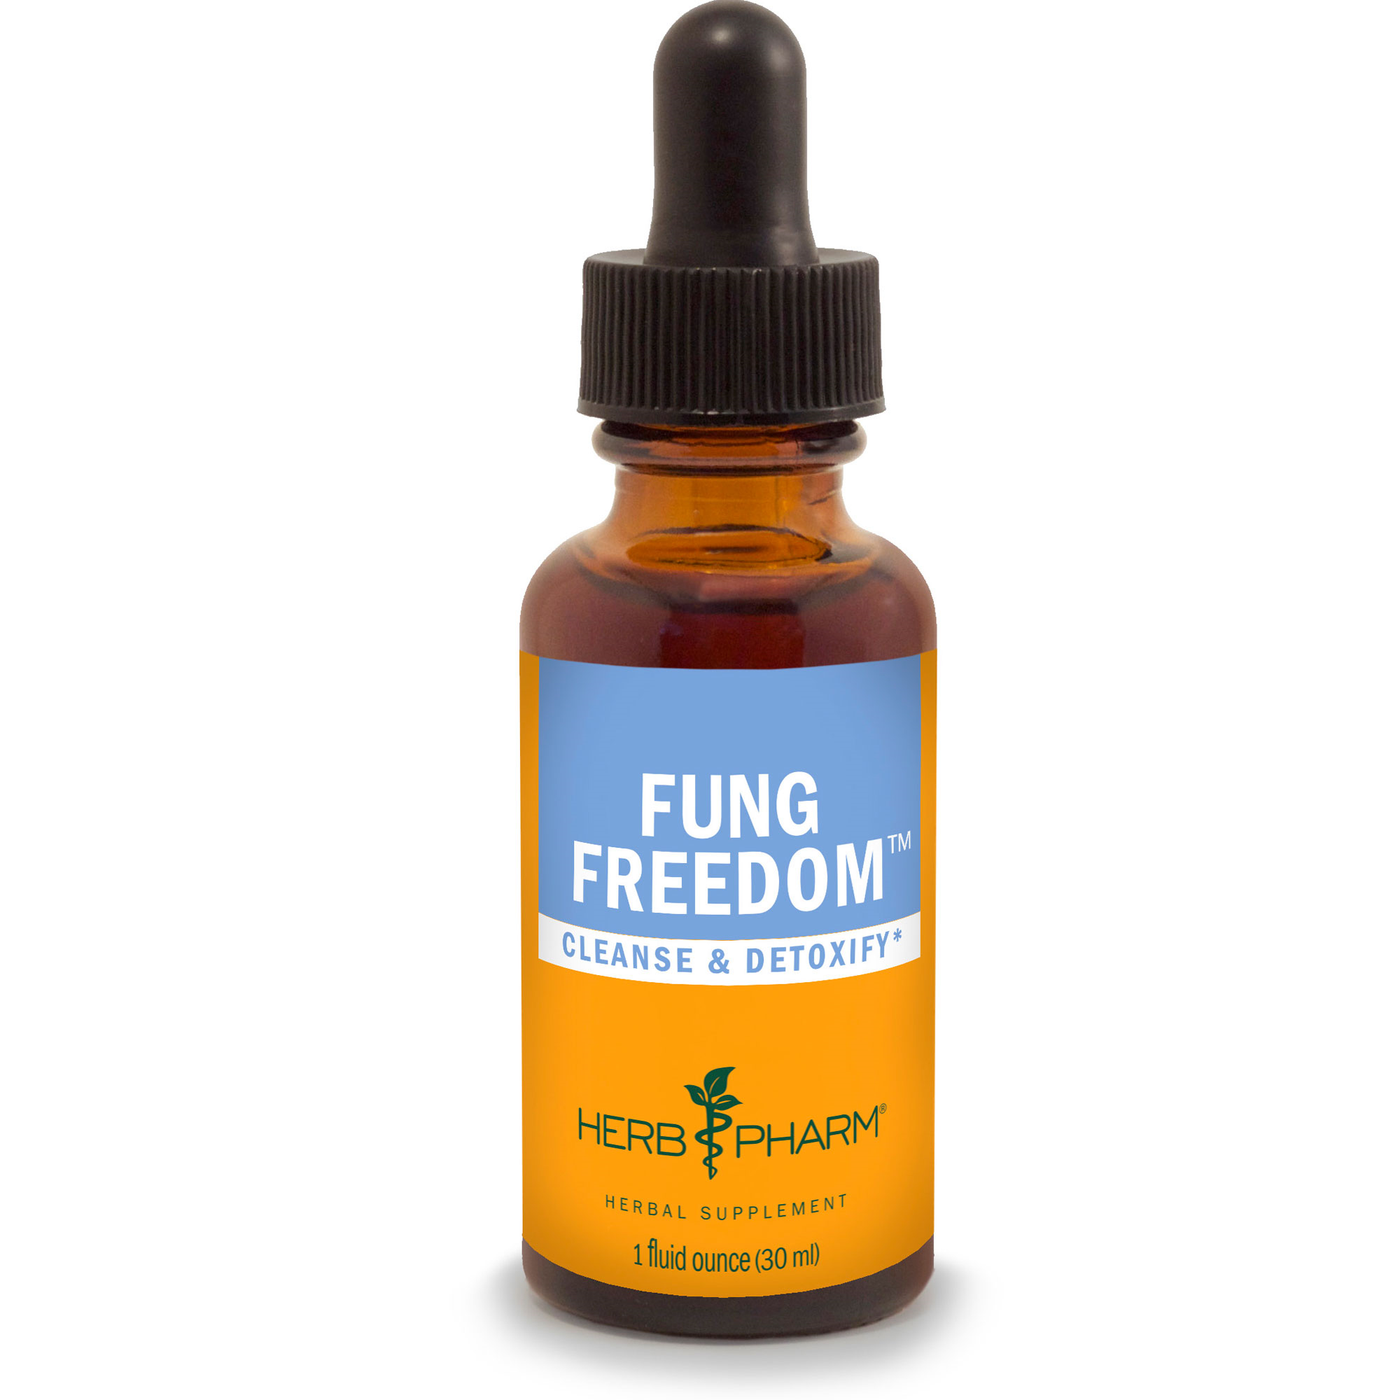 Fung Freedom 1 fl oz Curated Wellness